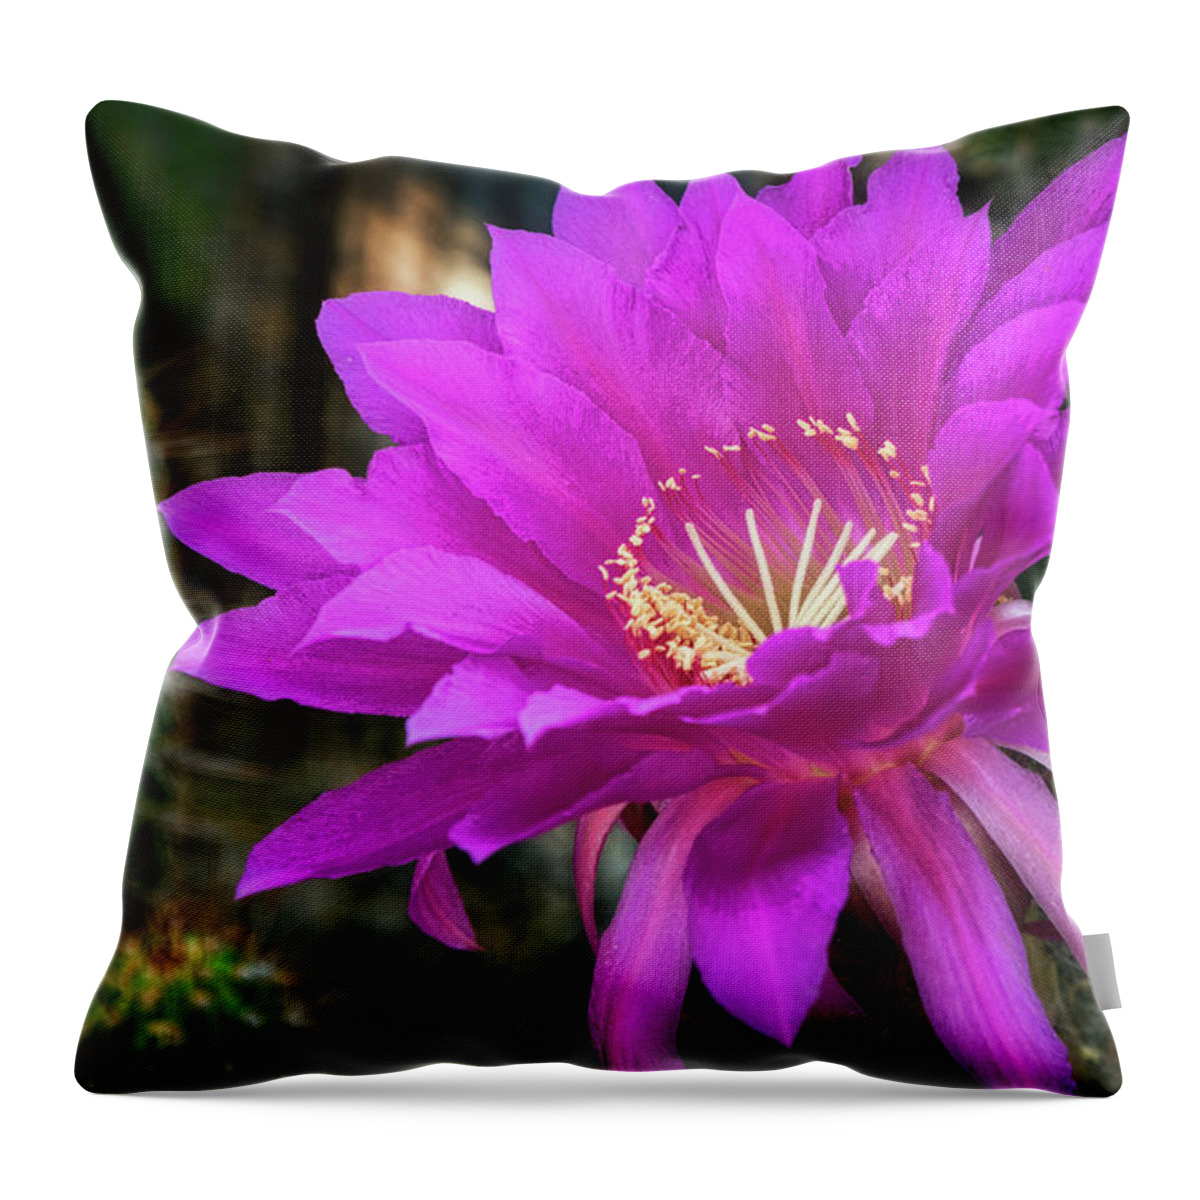 Echinopsis Throw Pillow featuring the photograph Echinopsis in Hot Pink by Saija Lehtonen